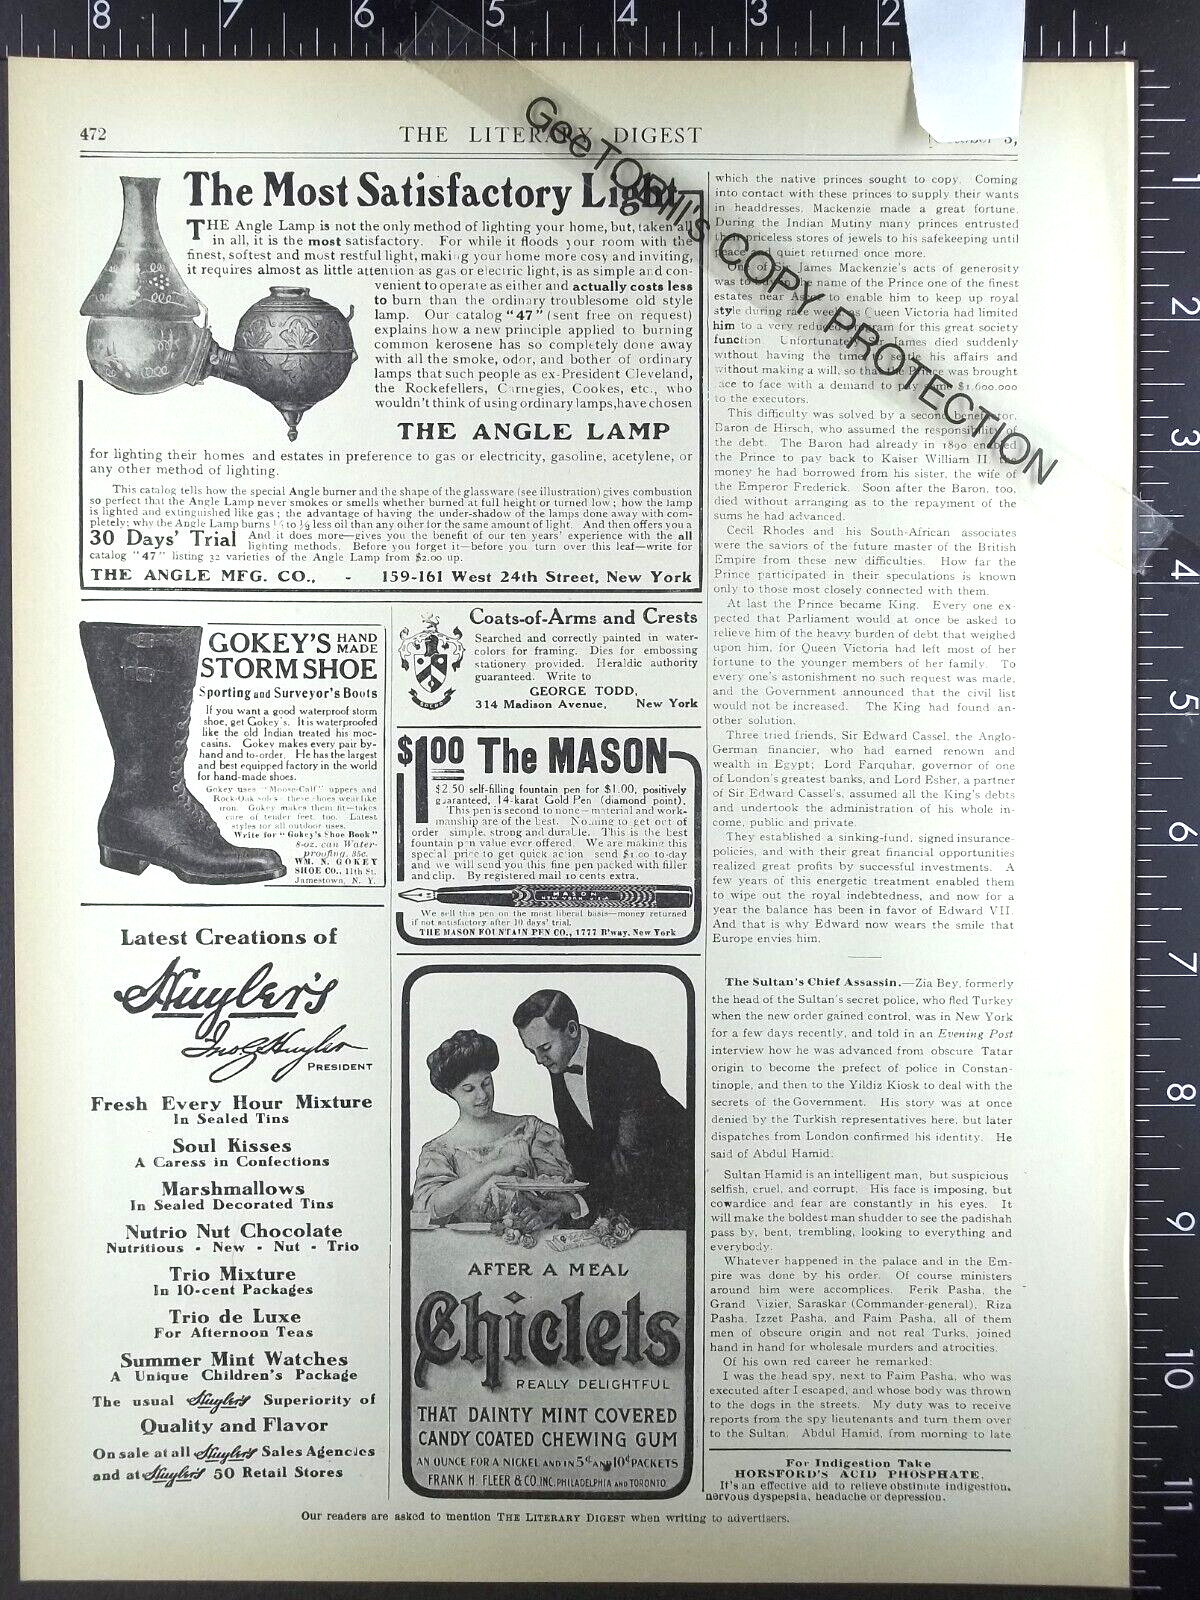 1908 ADVERTISING for kerosene Angle Lamp Mfg Co & Chiclets chewing gum